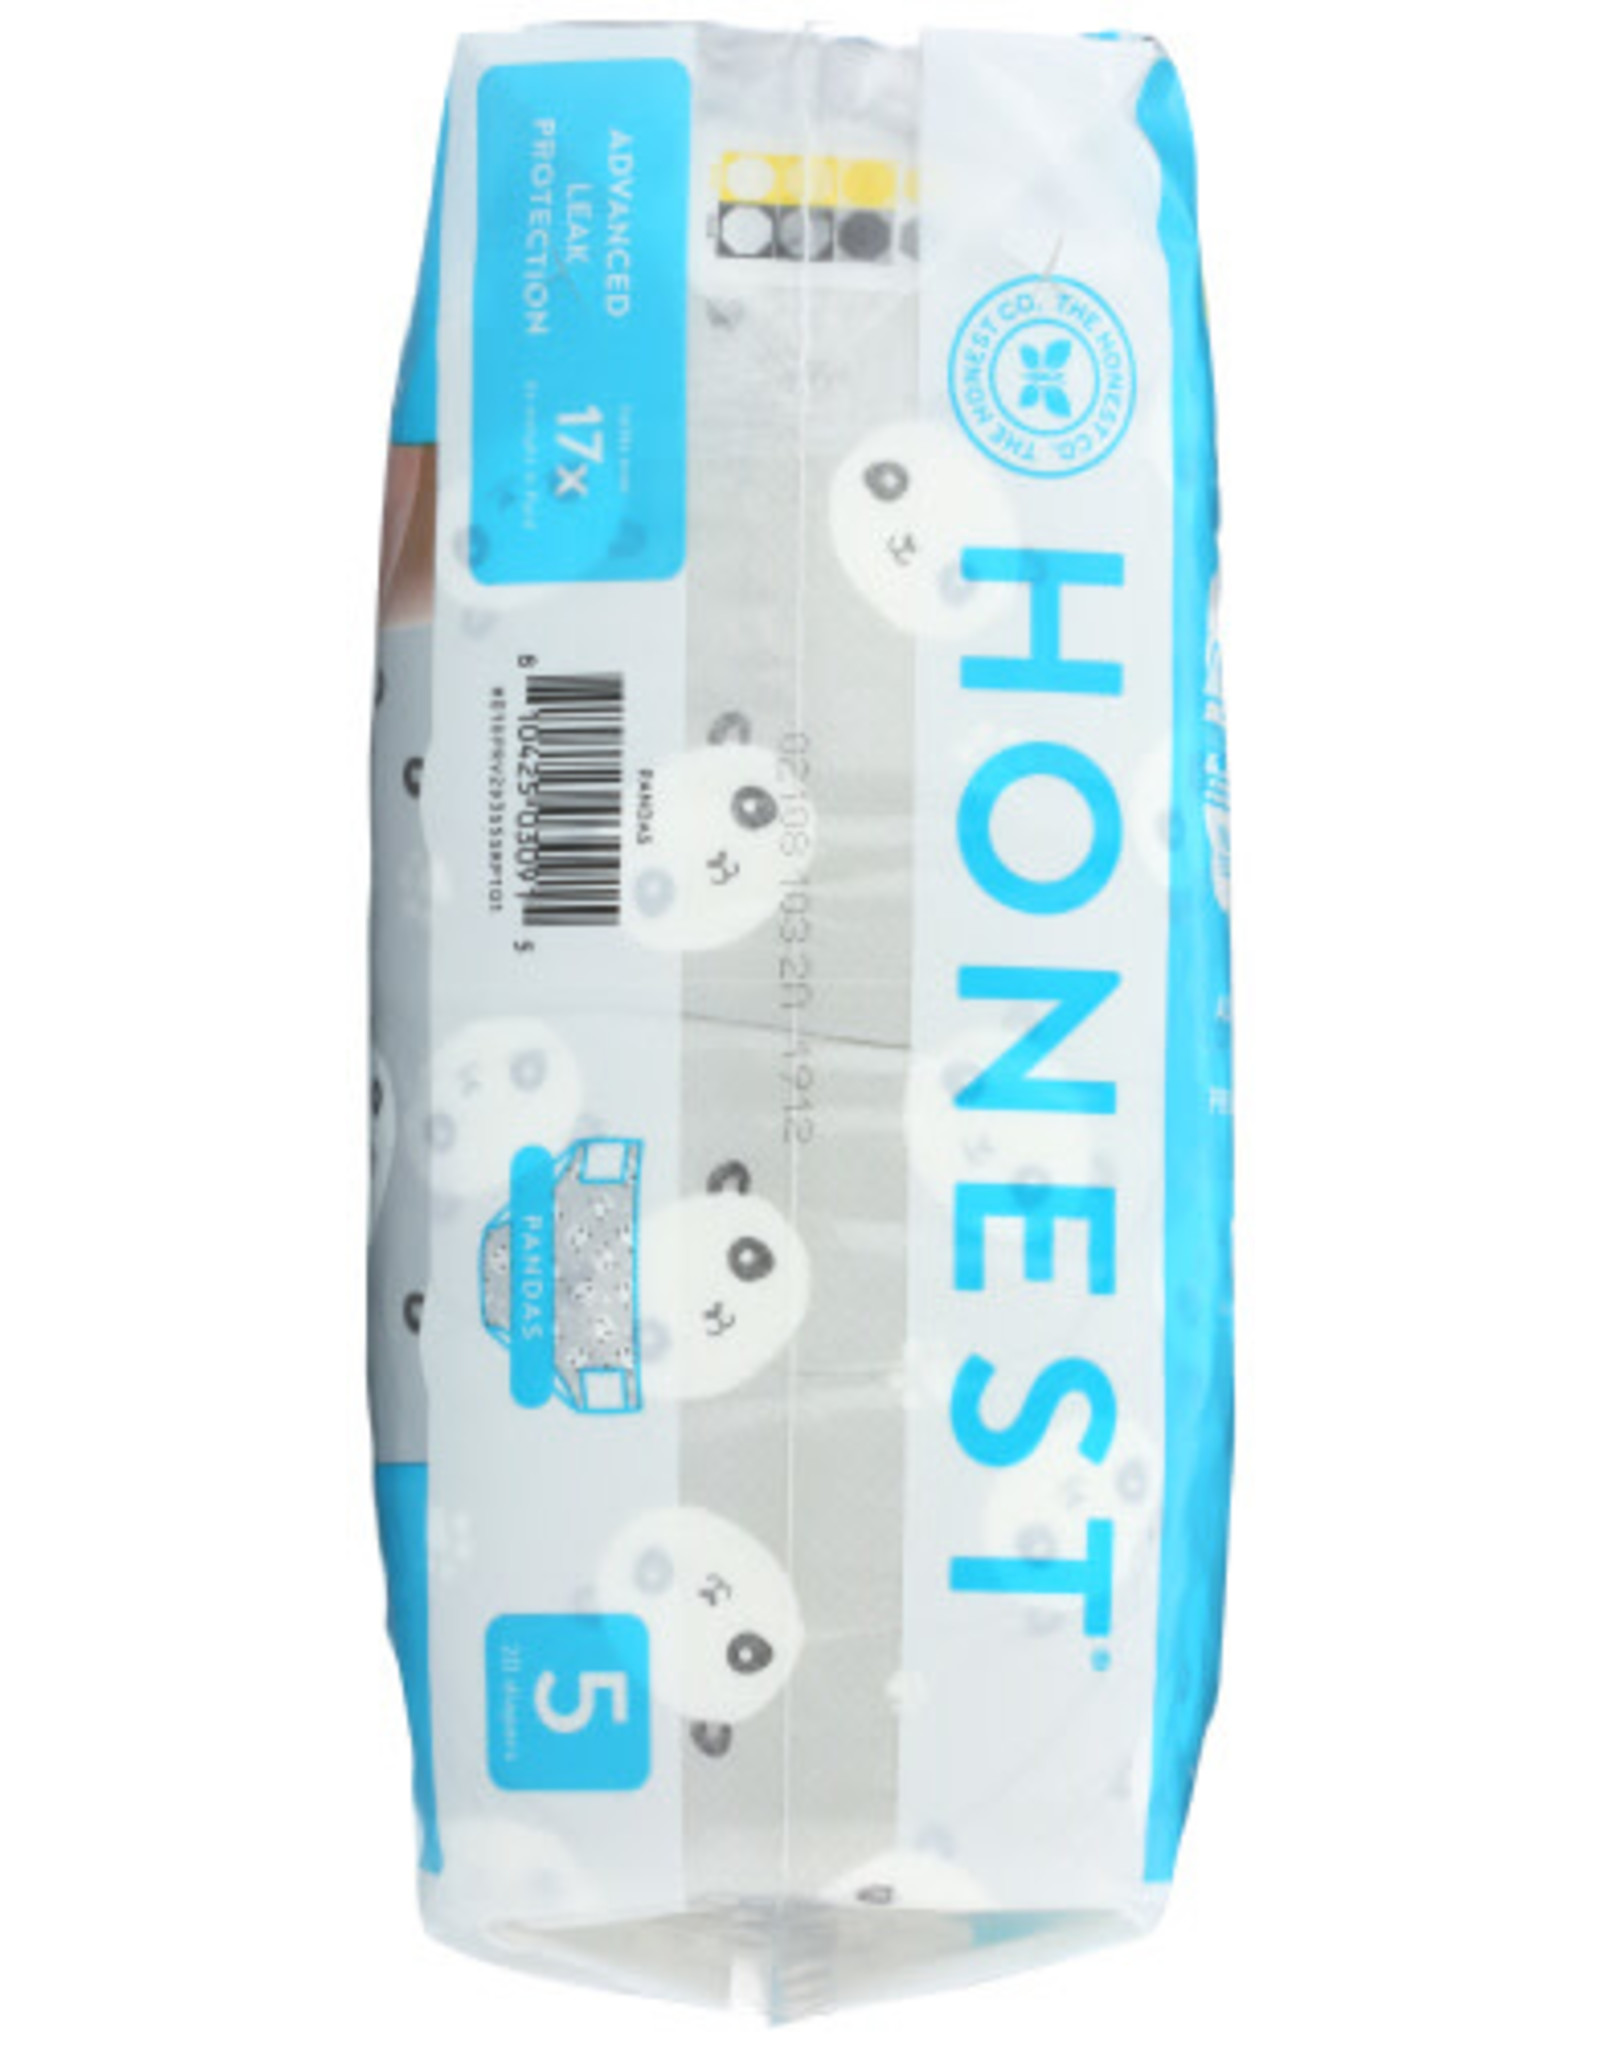 THE HONEST COMPANY X The Honest Co. Diaper Panda Size 5 20 PK